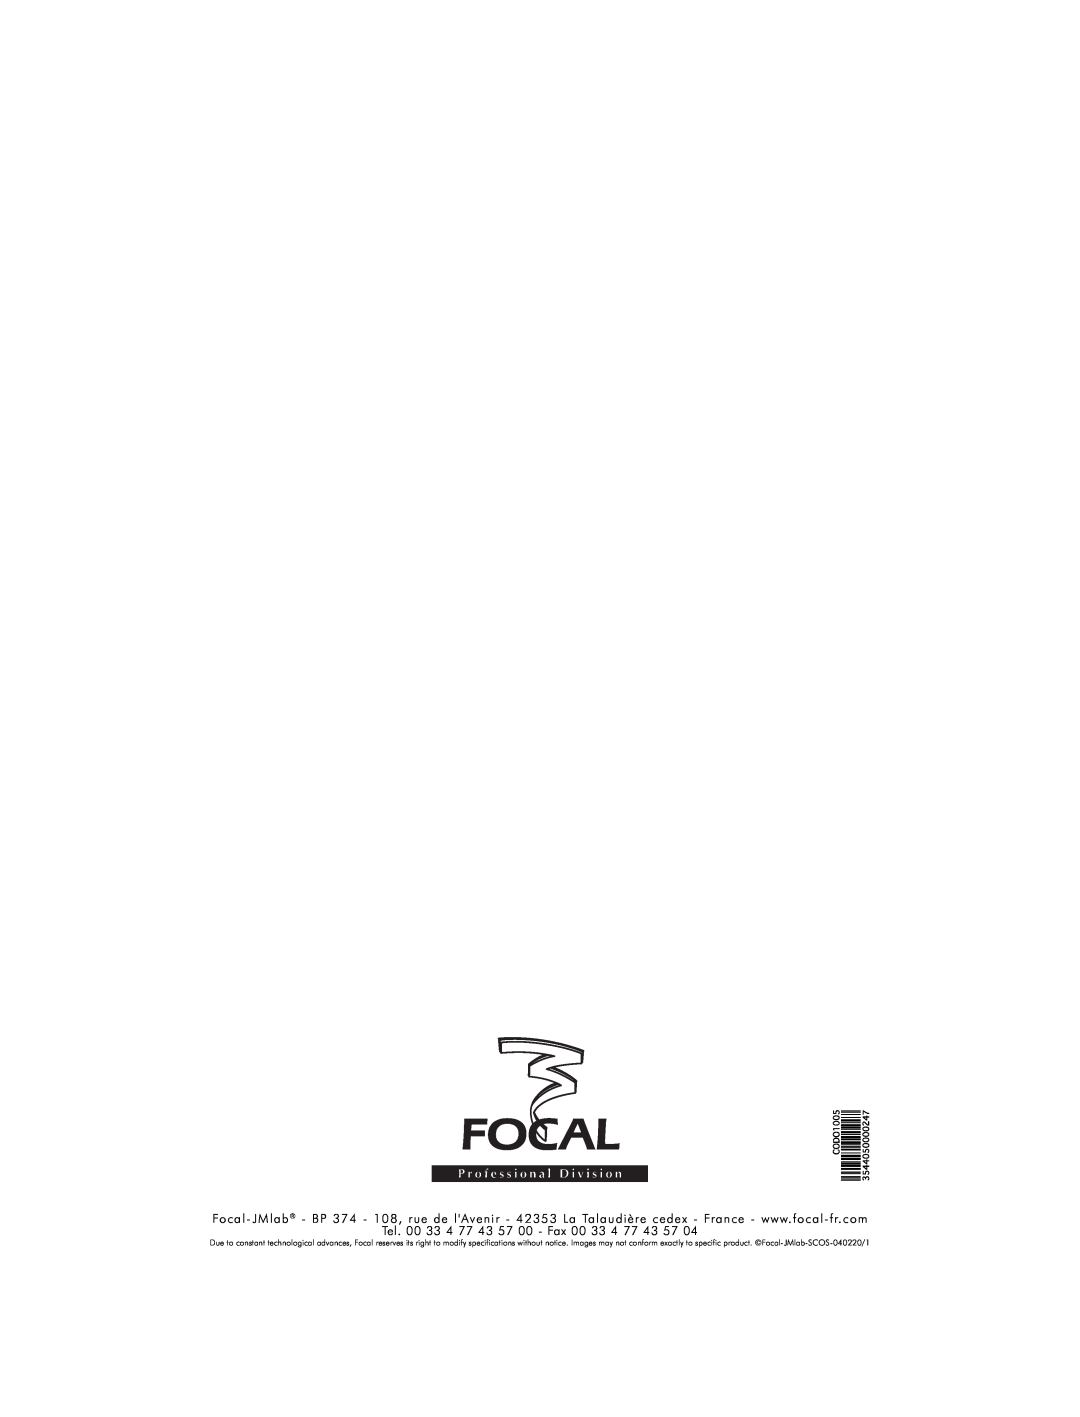 Focal SM11 user manual Tel. 00 33 4 77 43 57 00 - Fax 00 33 4 